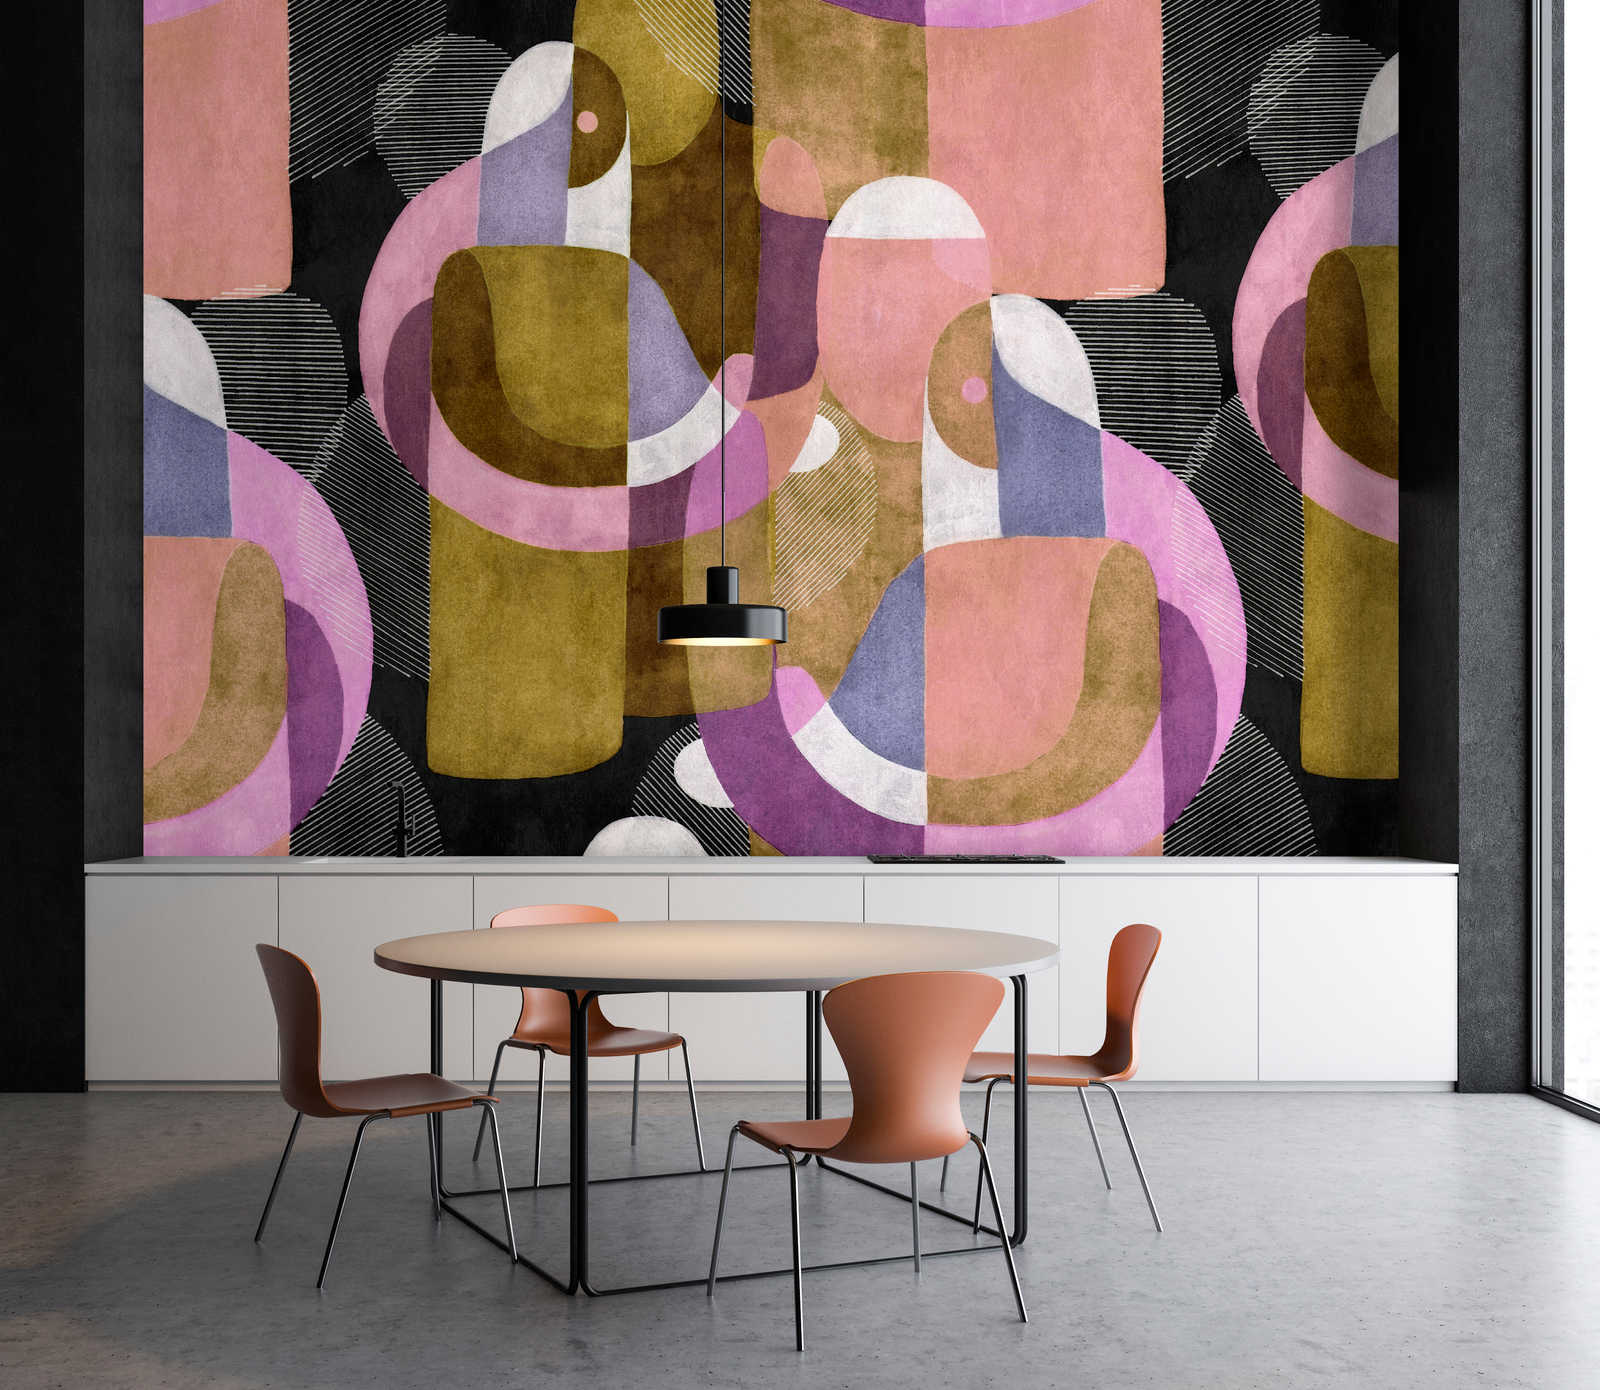             Meeting Place 3 – Fototapete Ethno Design im bunten Colour Block Stil
        